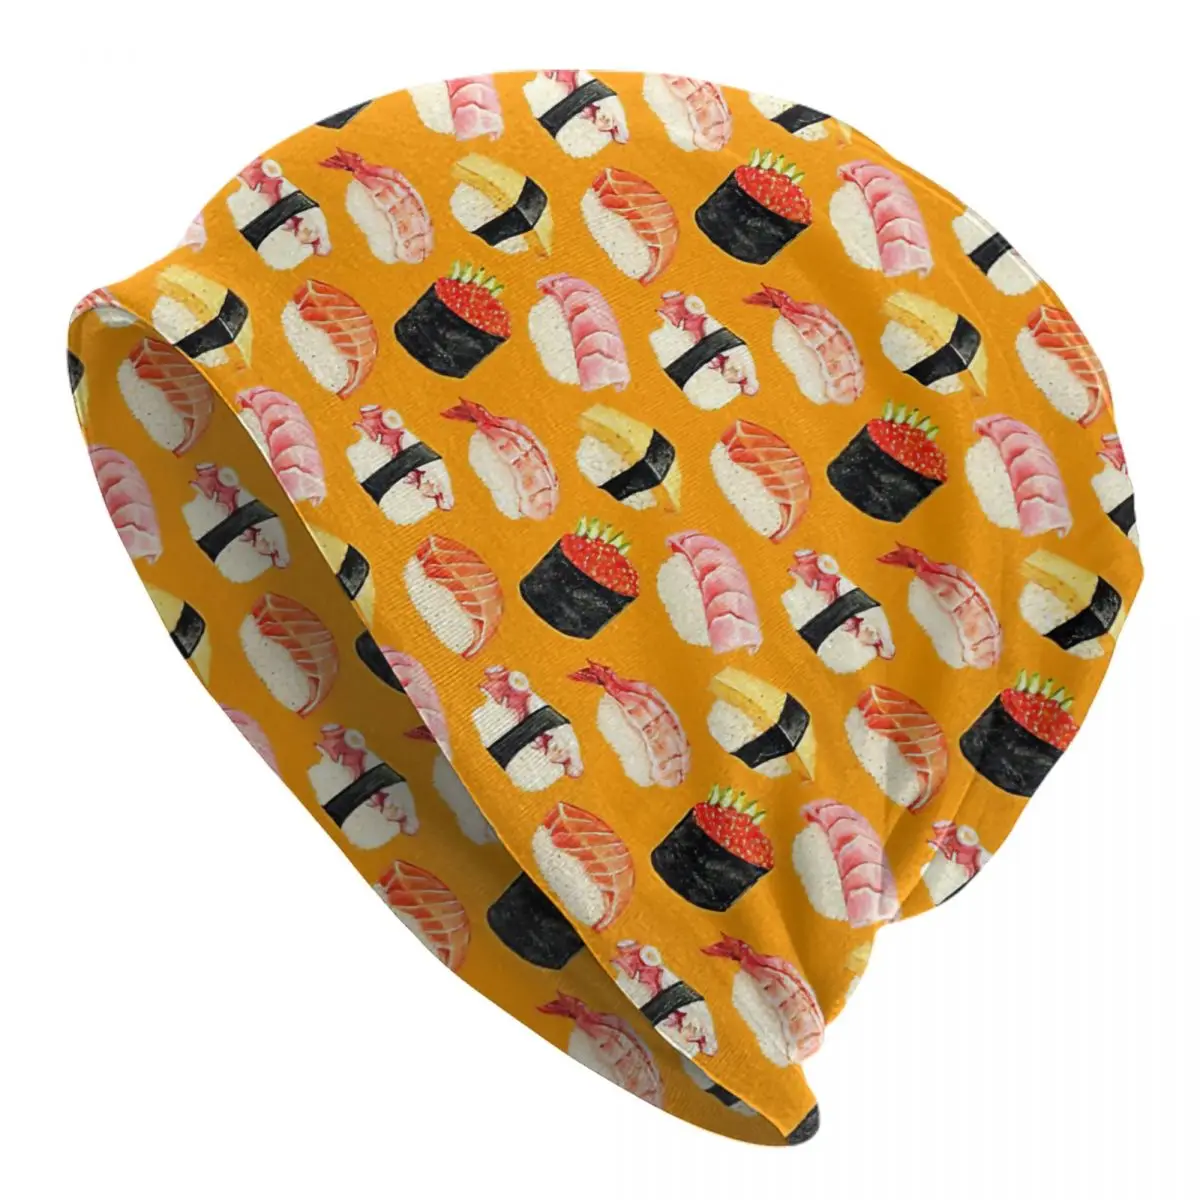 Sushi Nigiri Pattern - Orange Adult Men's Women's Knit Hat Keep warm winter Funny knitted hat